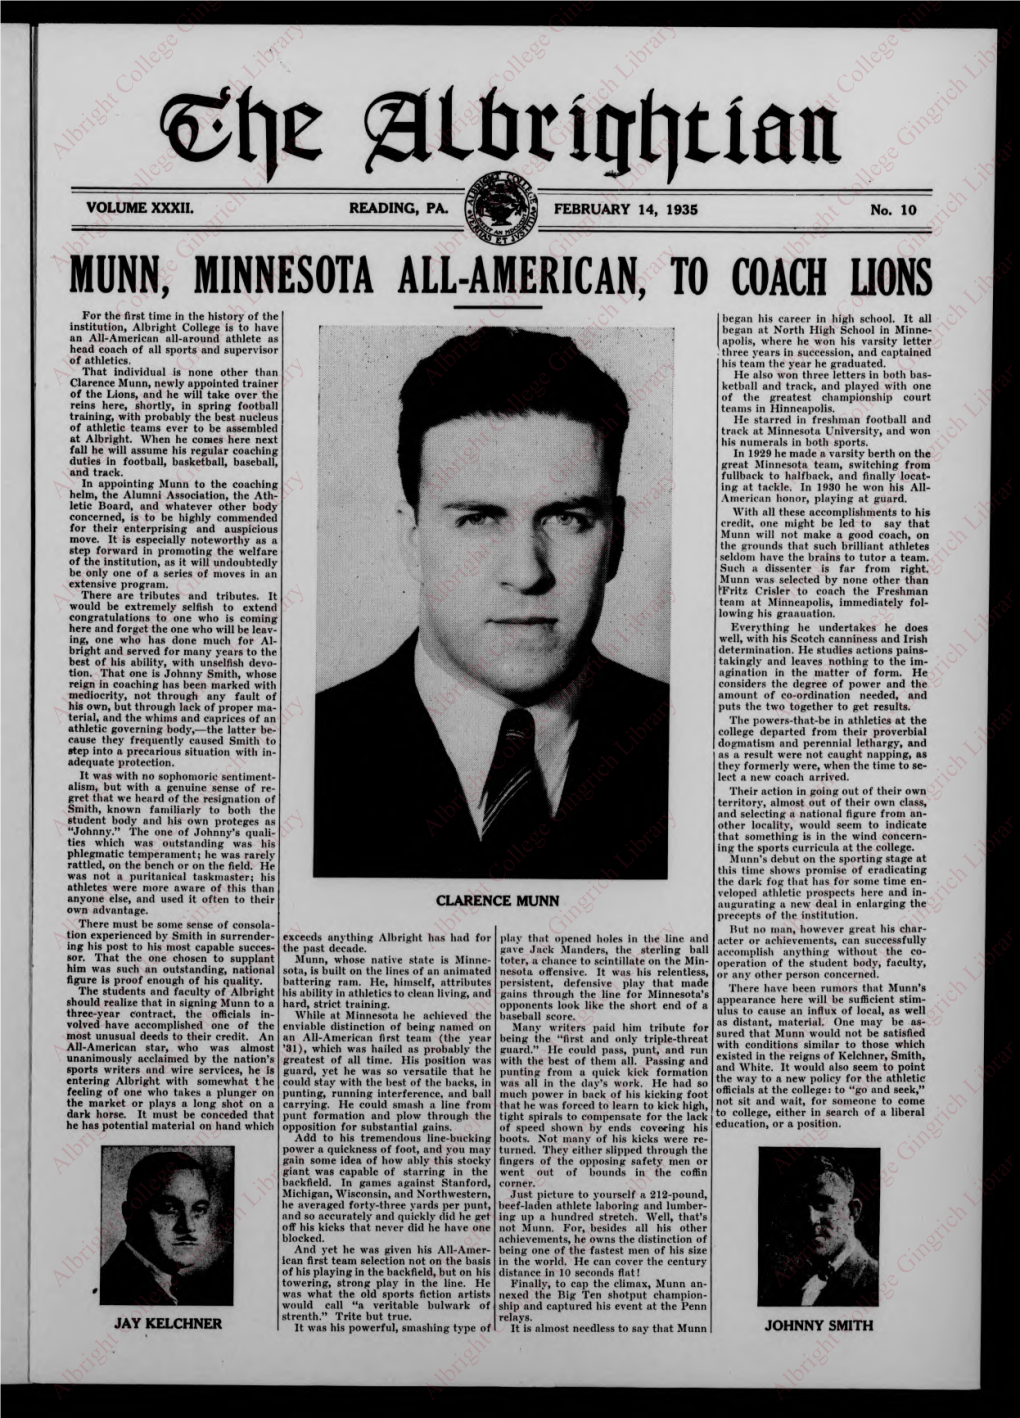 Munn, Minnesota All-American, to Coach Lions